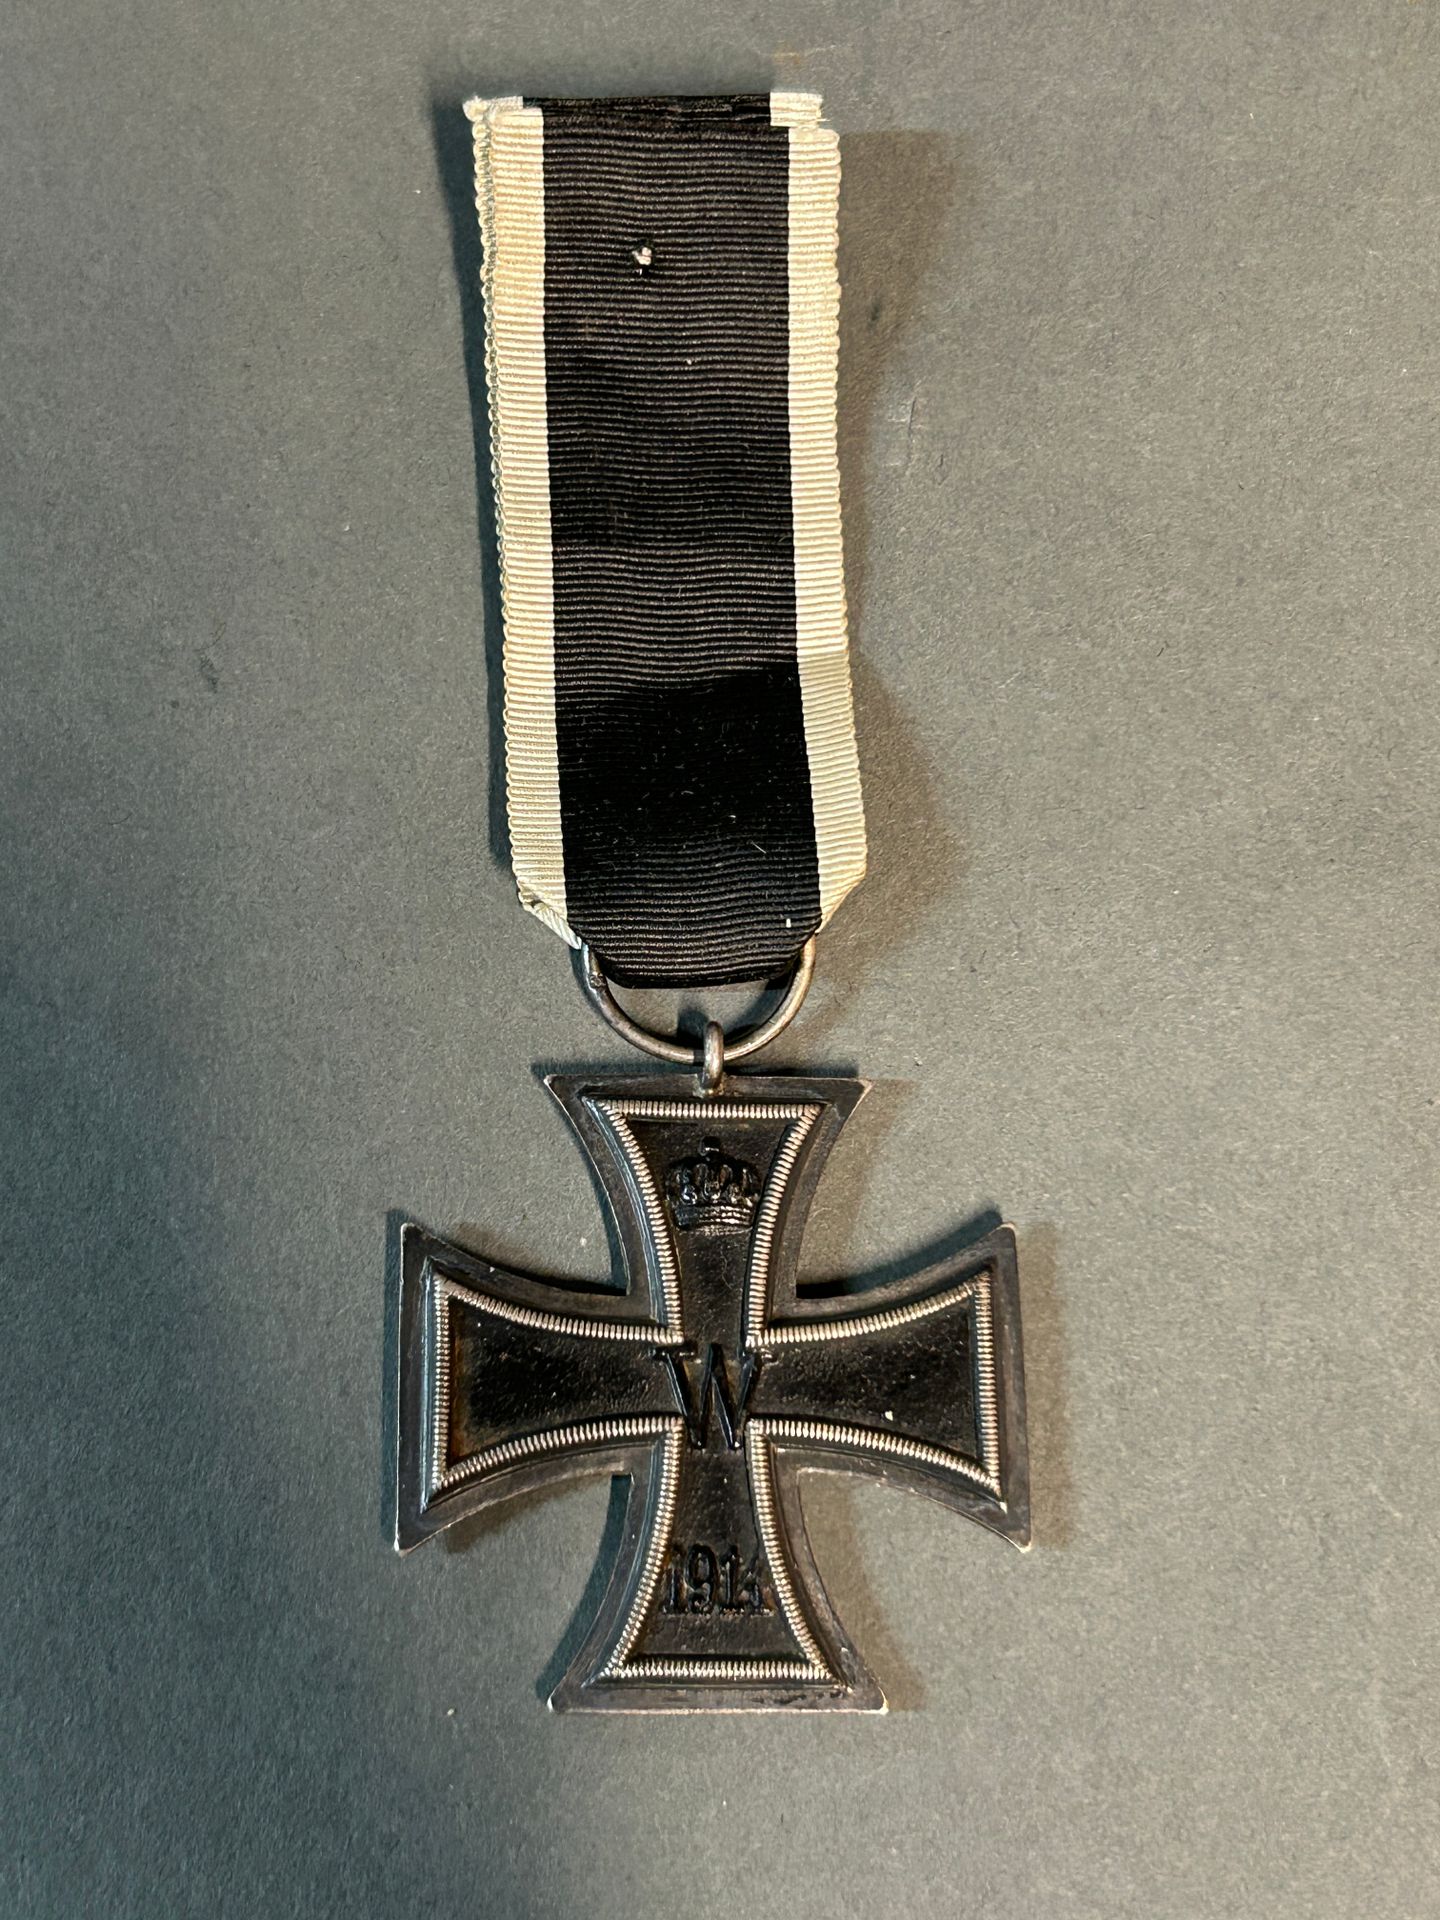 Null 二等铁十字勋章

第一次世界大战的银器。1914

尺寸为4.30 x 4.10厘米。

毛重：19.11克。